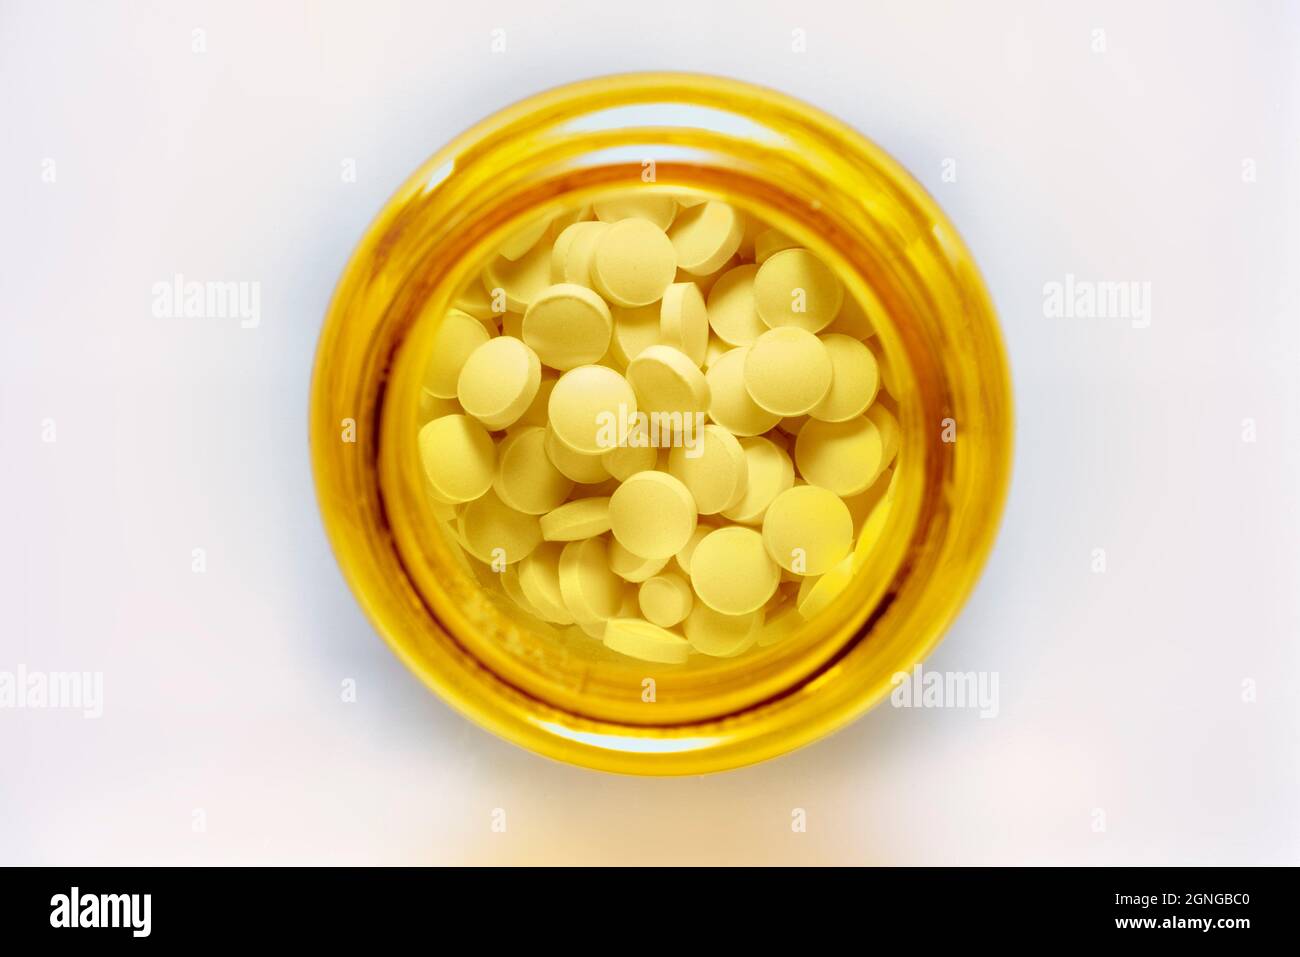 25 microgram tablets of cholecalciferol or vitamin D3. Stock Photo